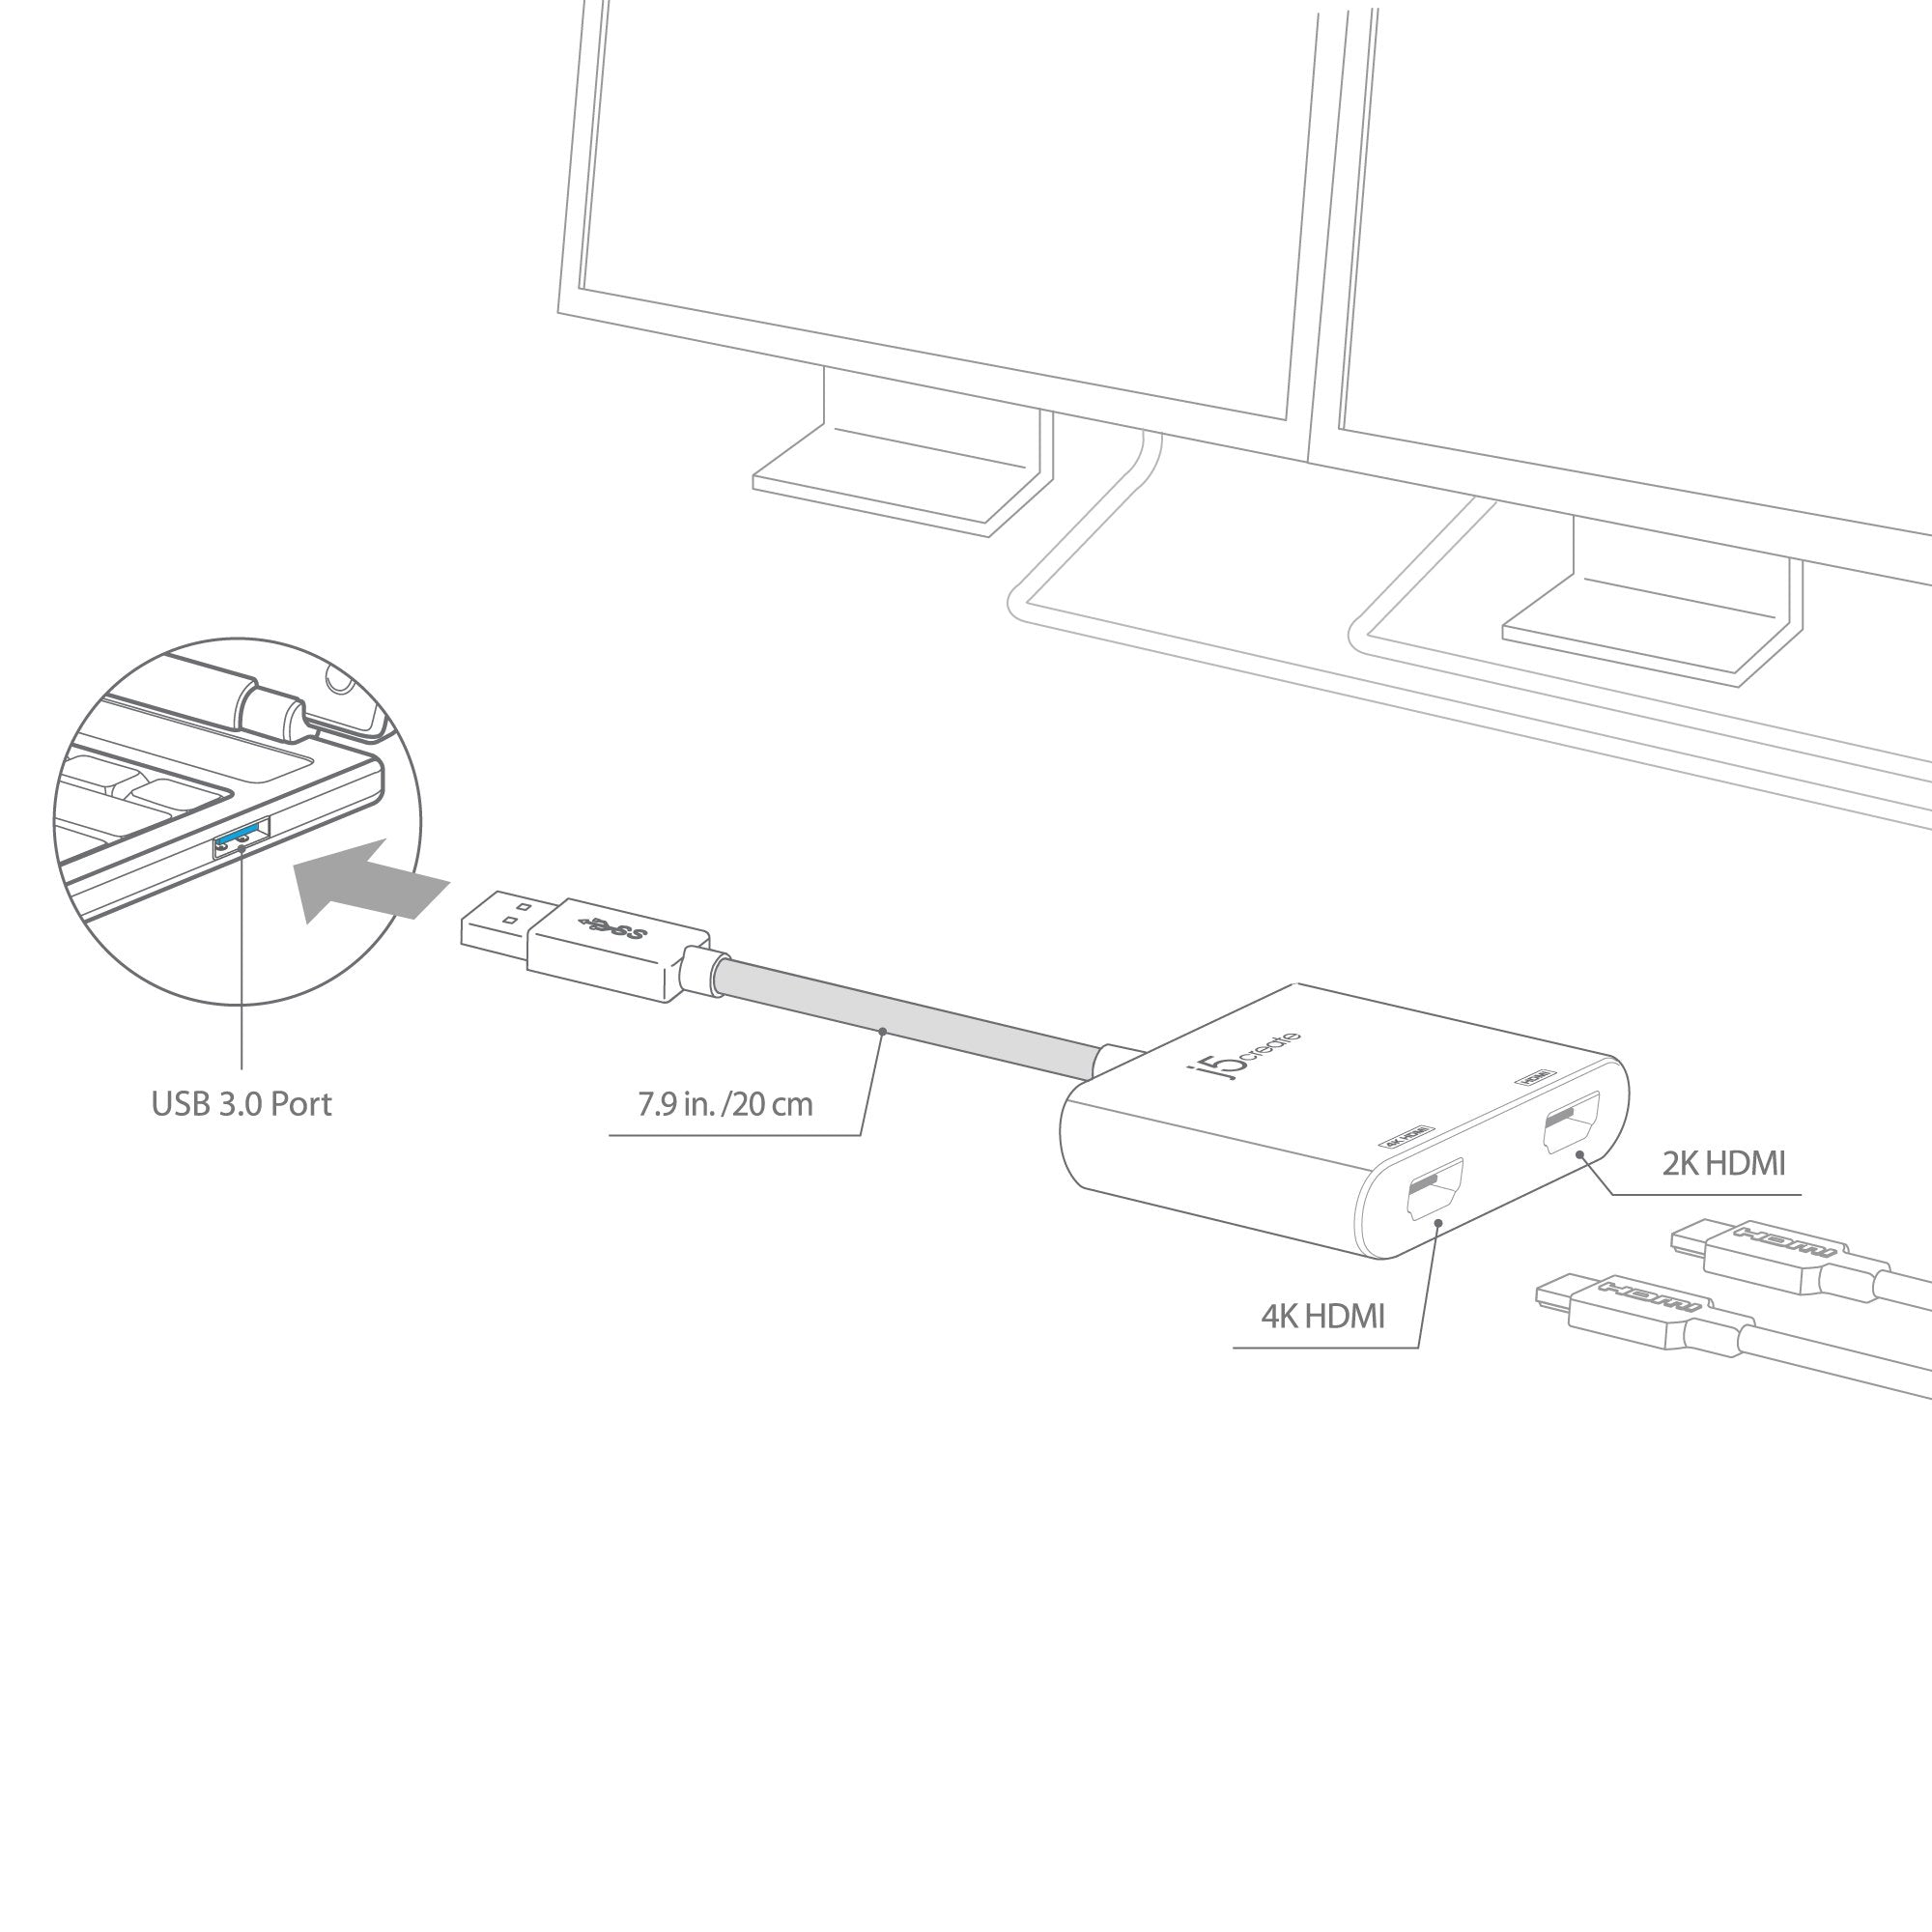 USB-C® to Dual HDMI™ Multi-Monitor Adapter – j5create